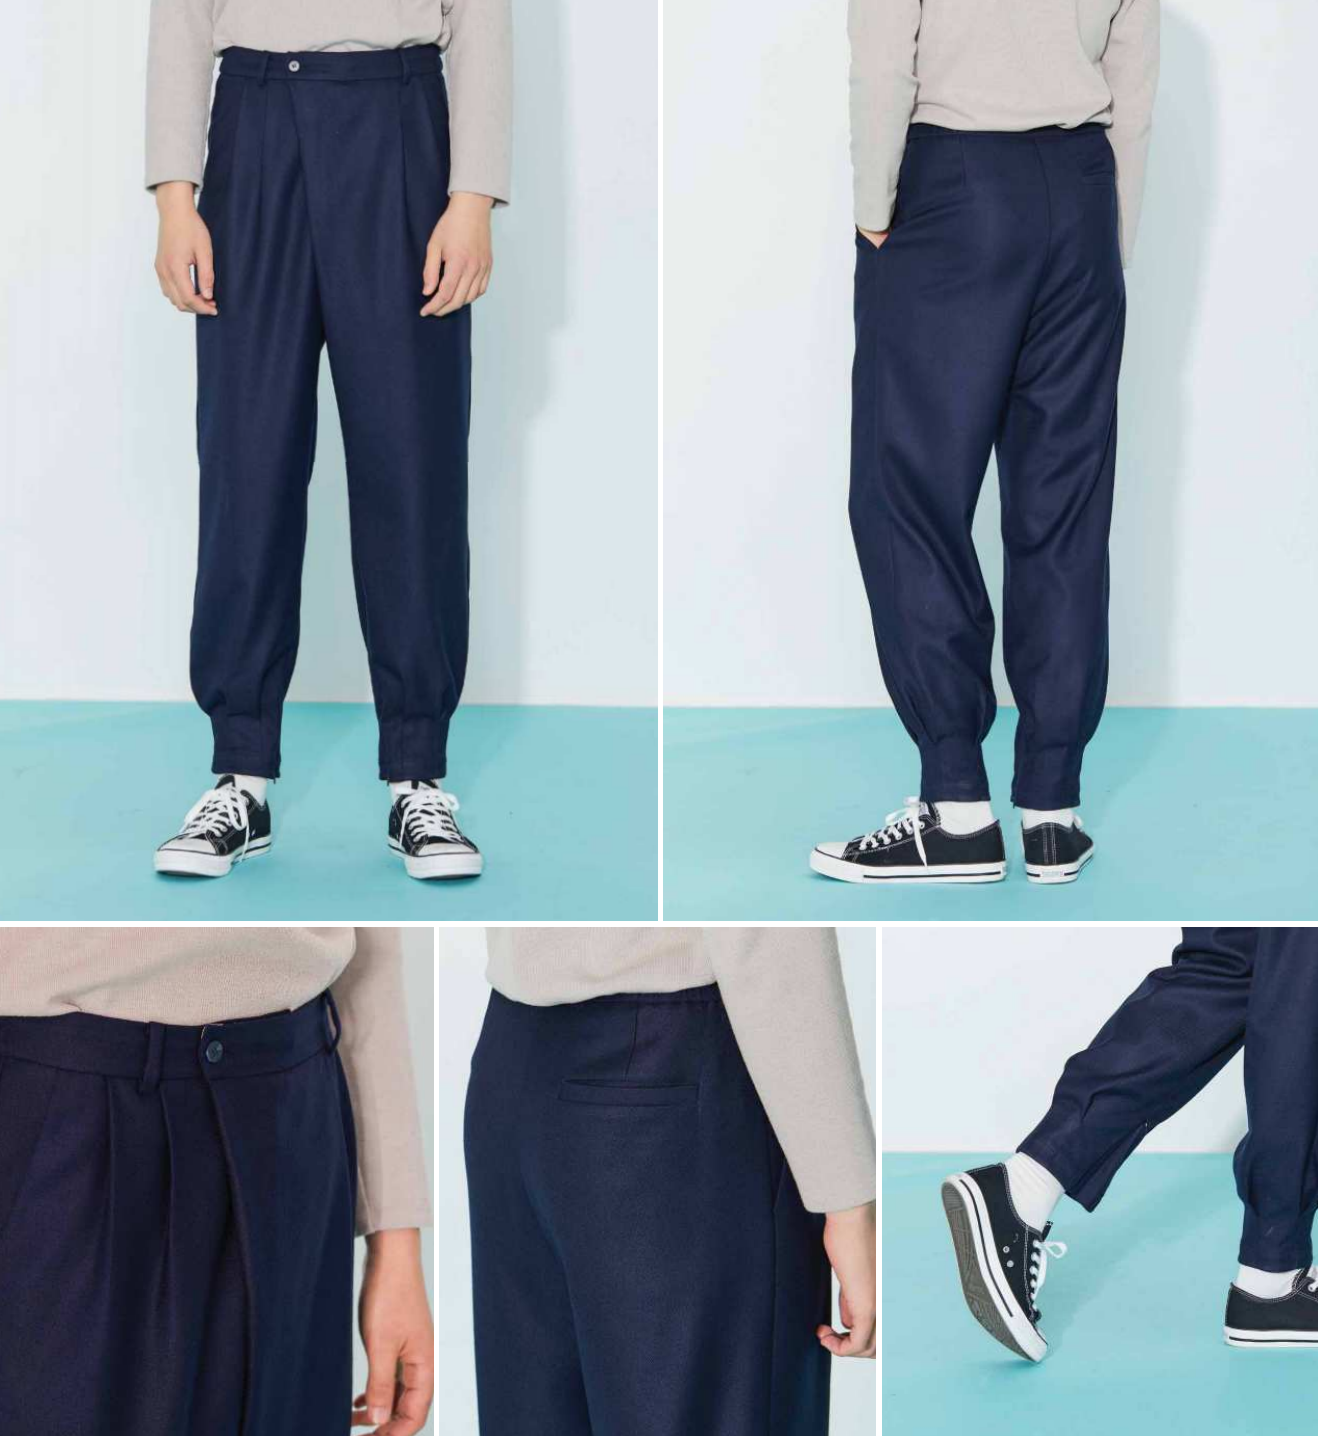 Hanbok Uniforms - Men's summer style trousers